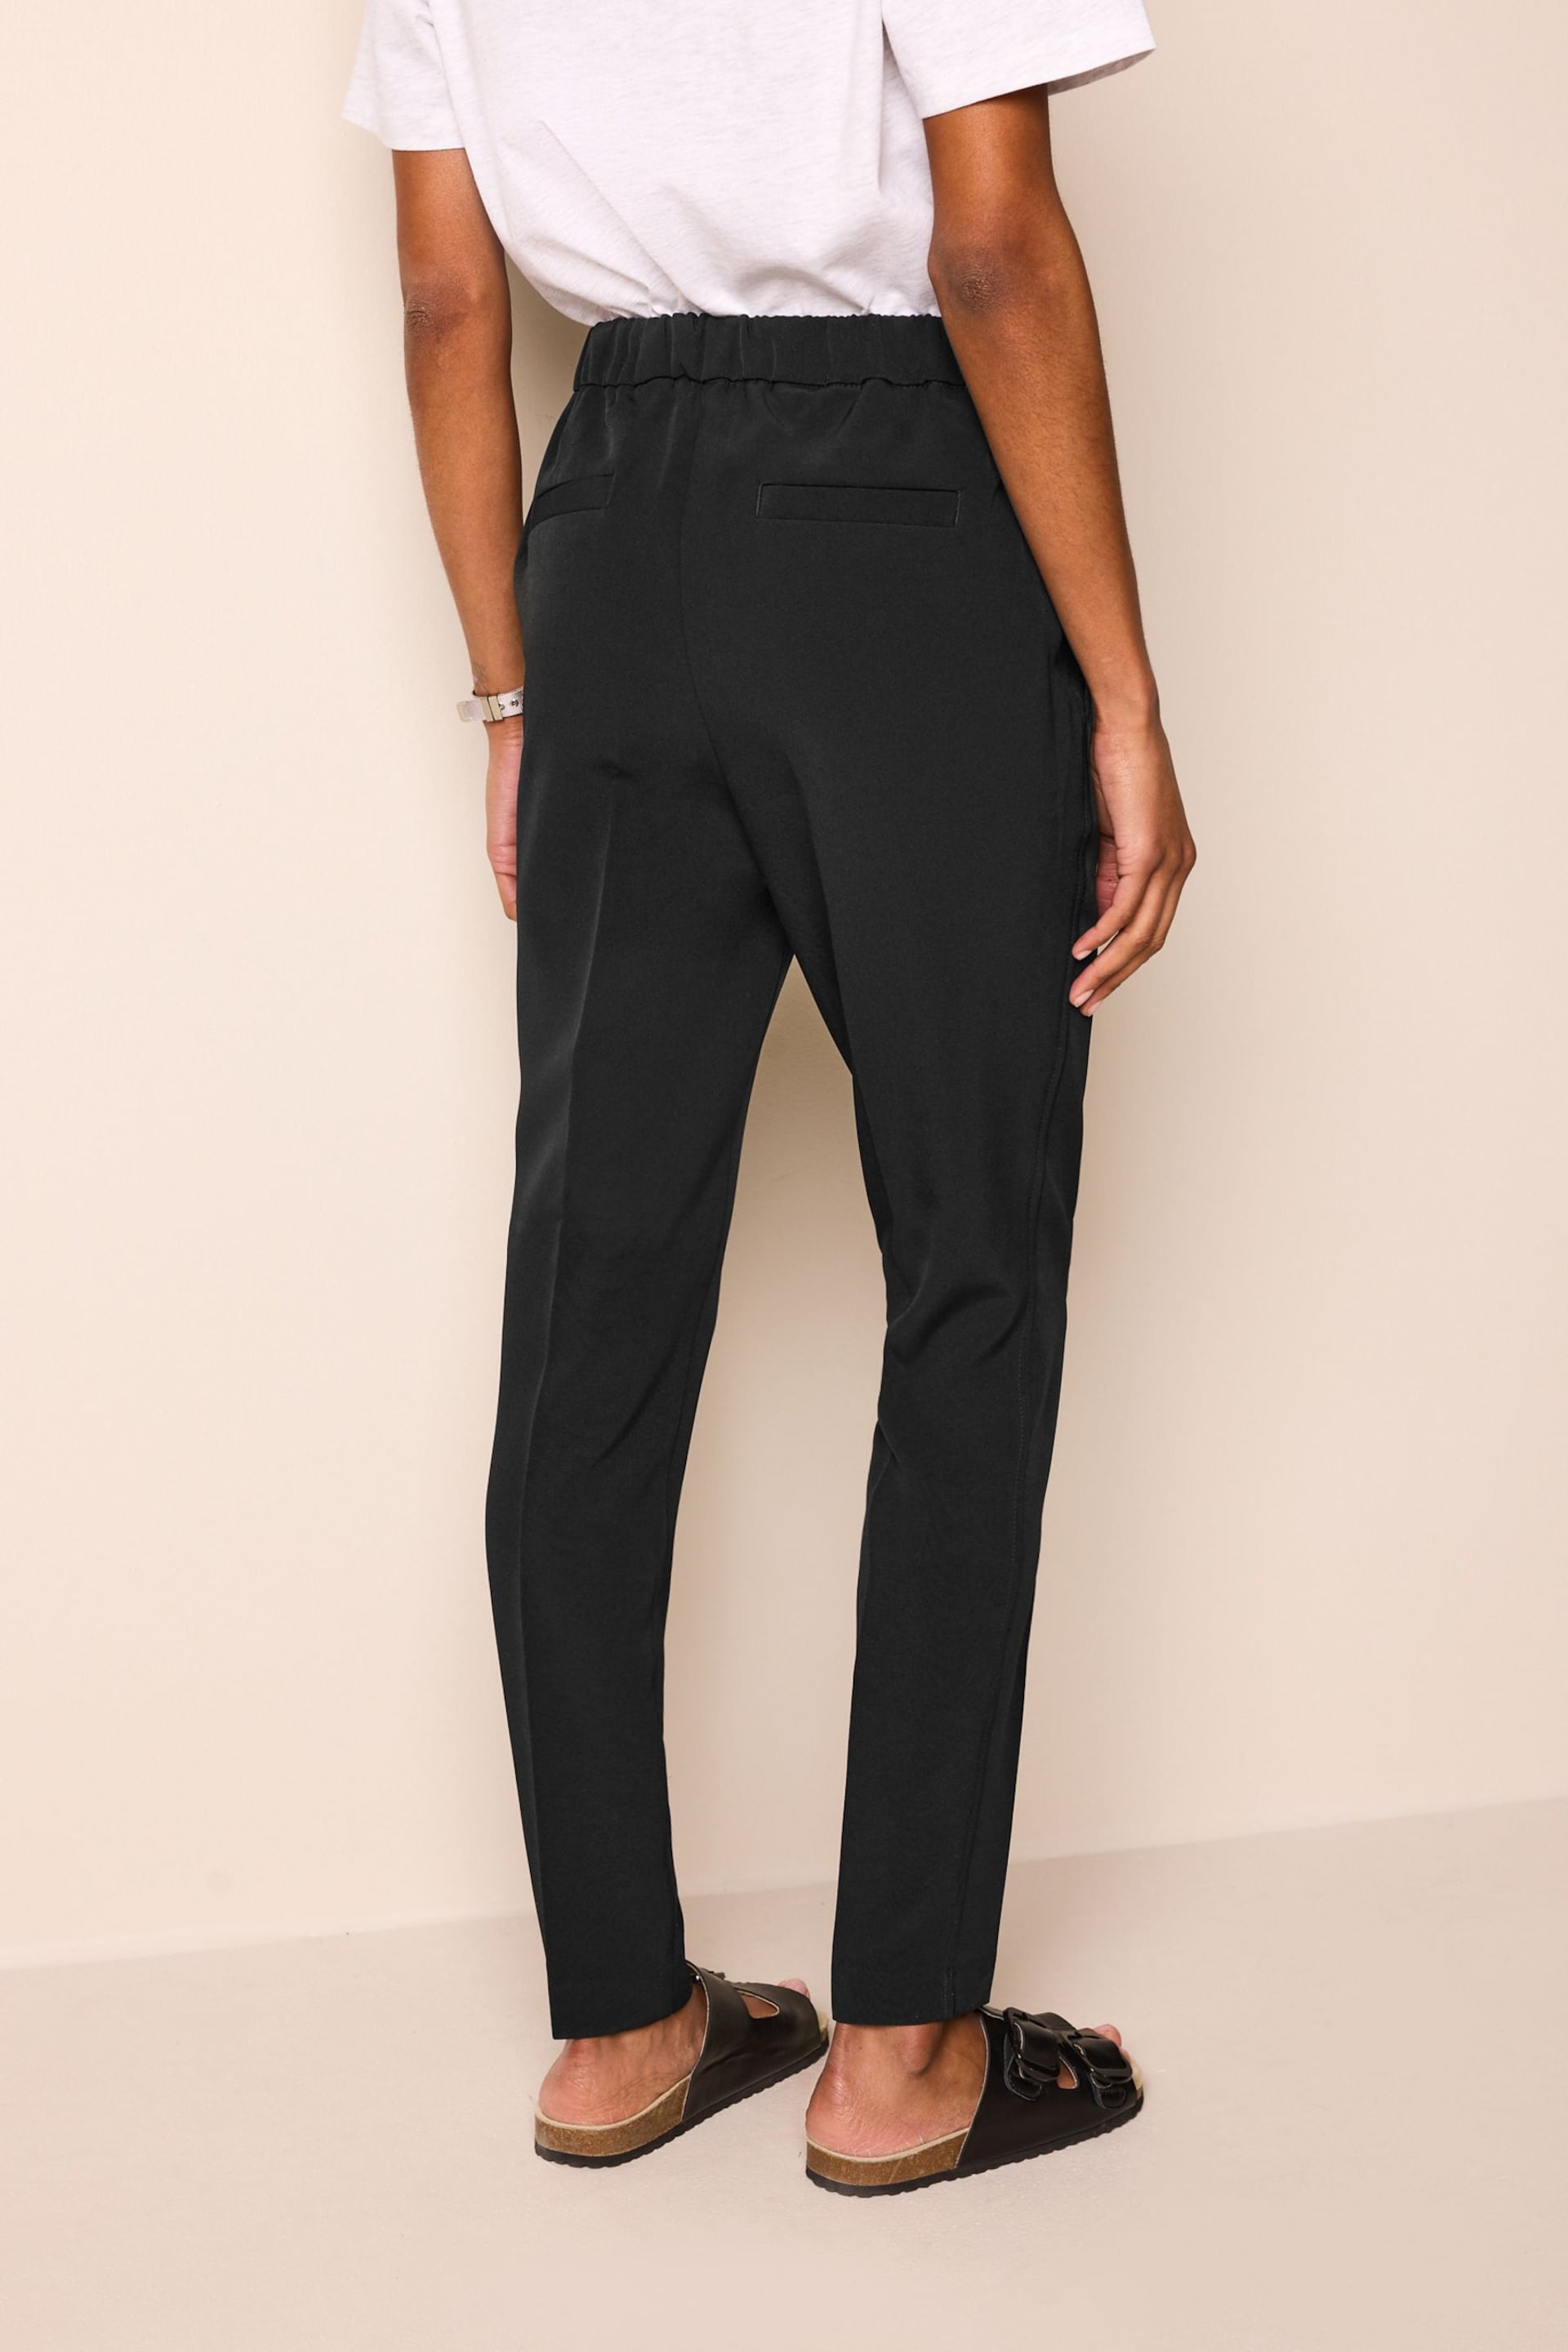 Black Tailored Elastic Back Skinny Leg Trousers - Image 3 of 5